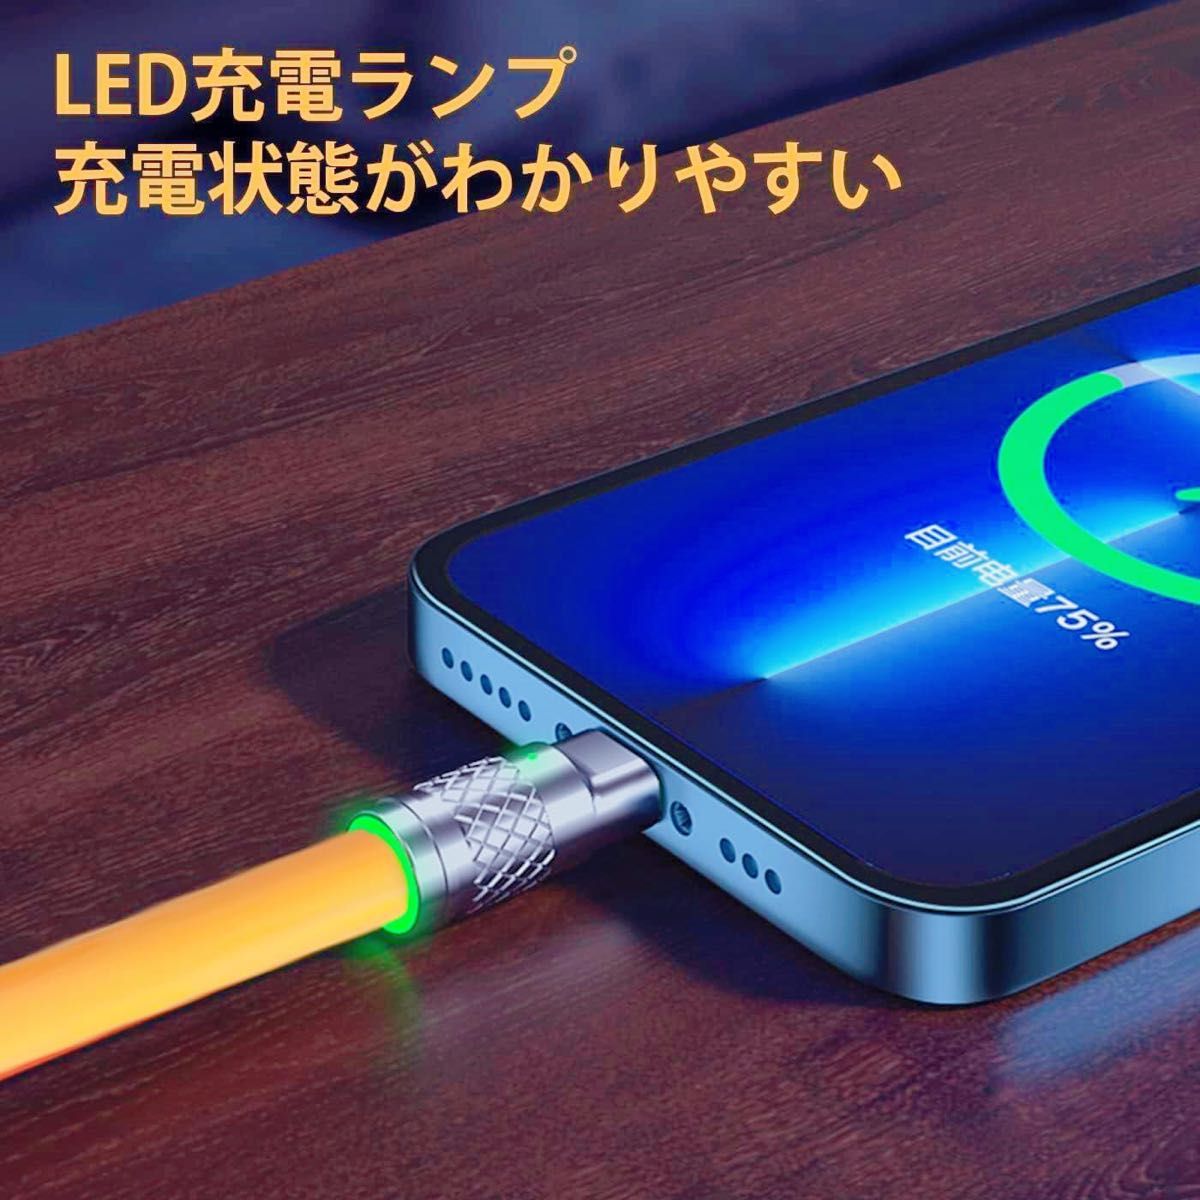 3in1 充電ケーブル USB ケーブル  急速充電 USB 充電コード 耐久性 3台同時給電可能 等全機種対応 1.2m 紫色